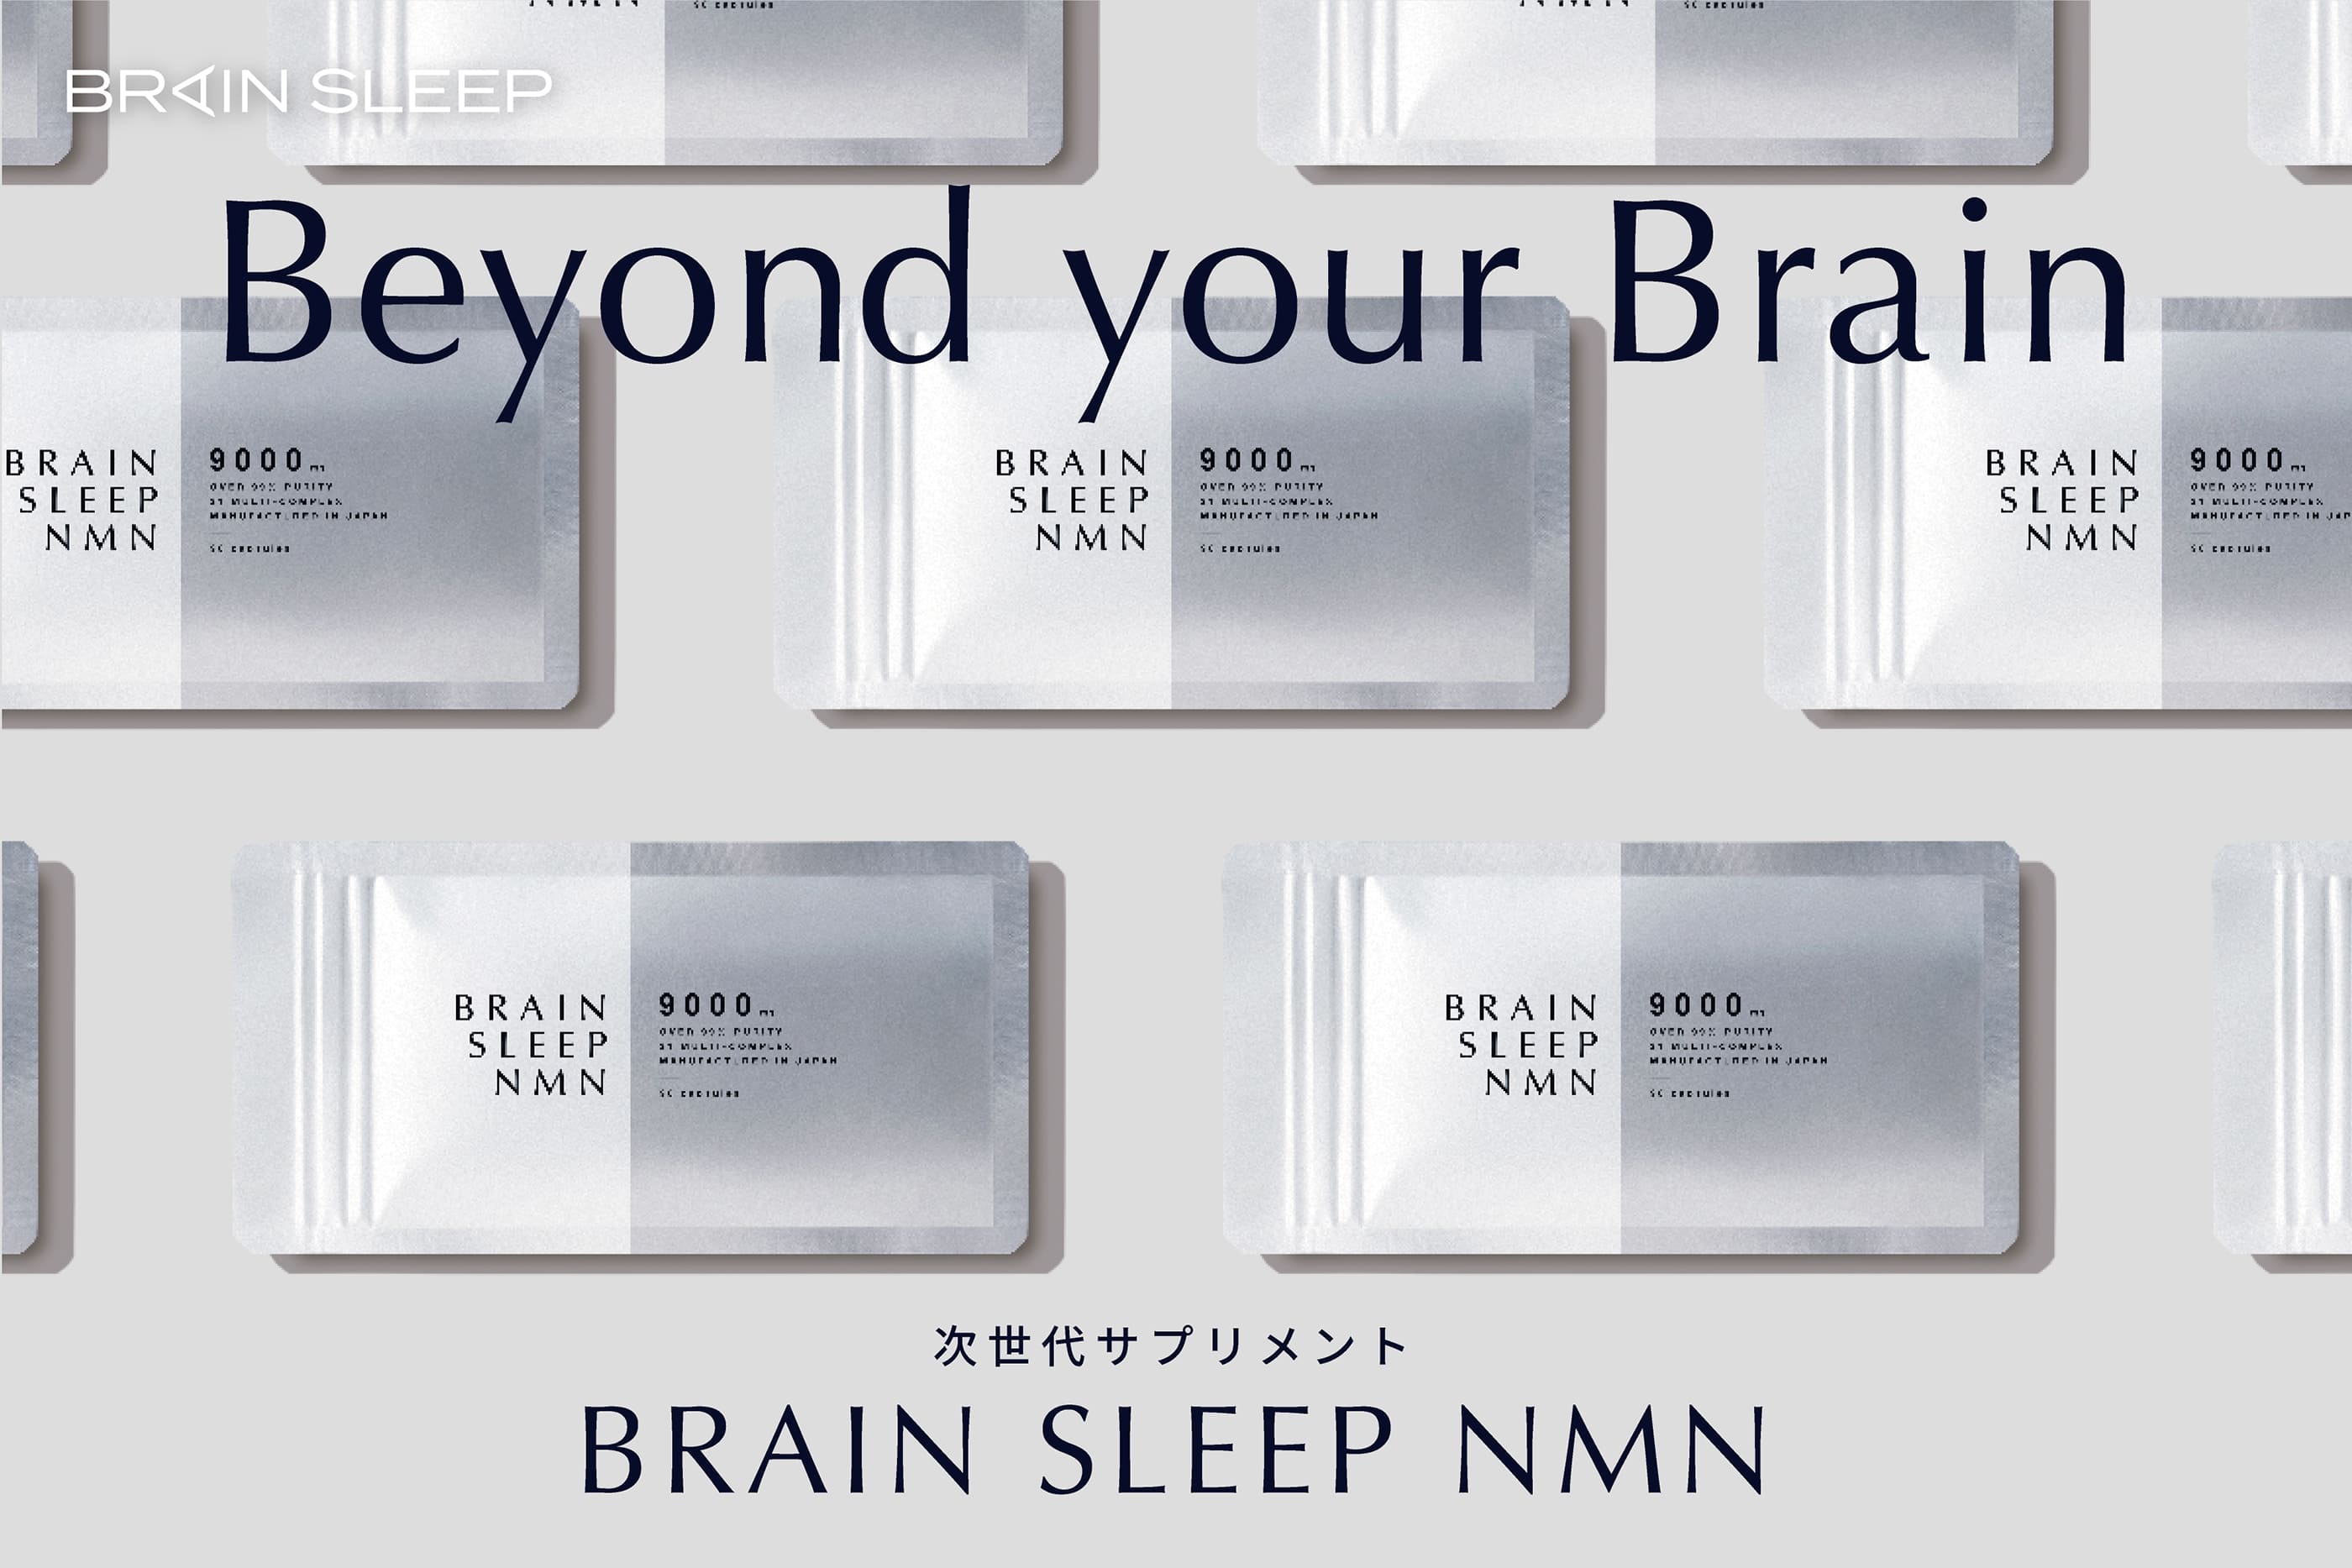 Beyond your Bain 次世代エイジングケアサプリメント BRAIN SLEEP NMN